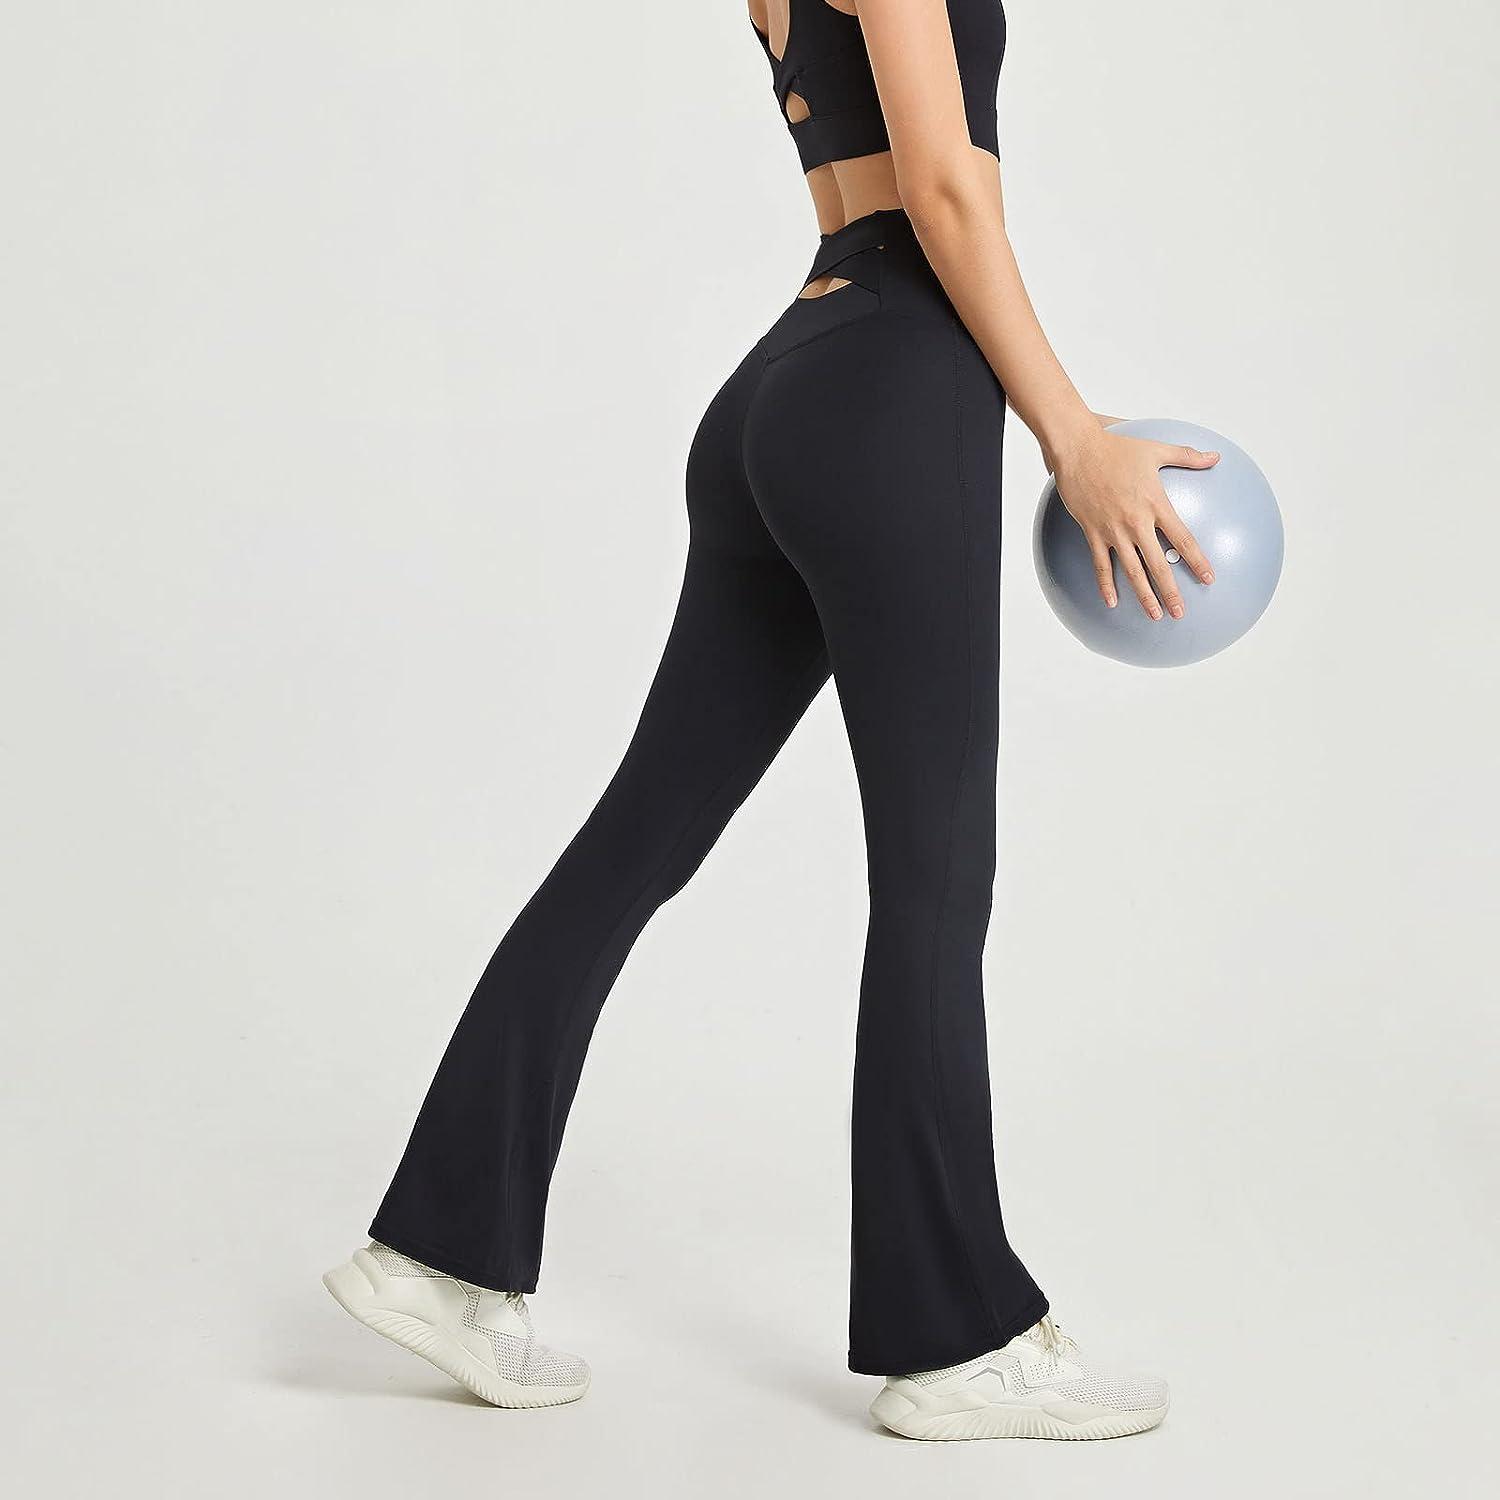 ESCBUKI Flare Yoga Pants for Women High Waist Solid Color Tummy Control  Sweatpants Casual Gym Workout Workout Pants Small Black Yoga Pants